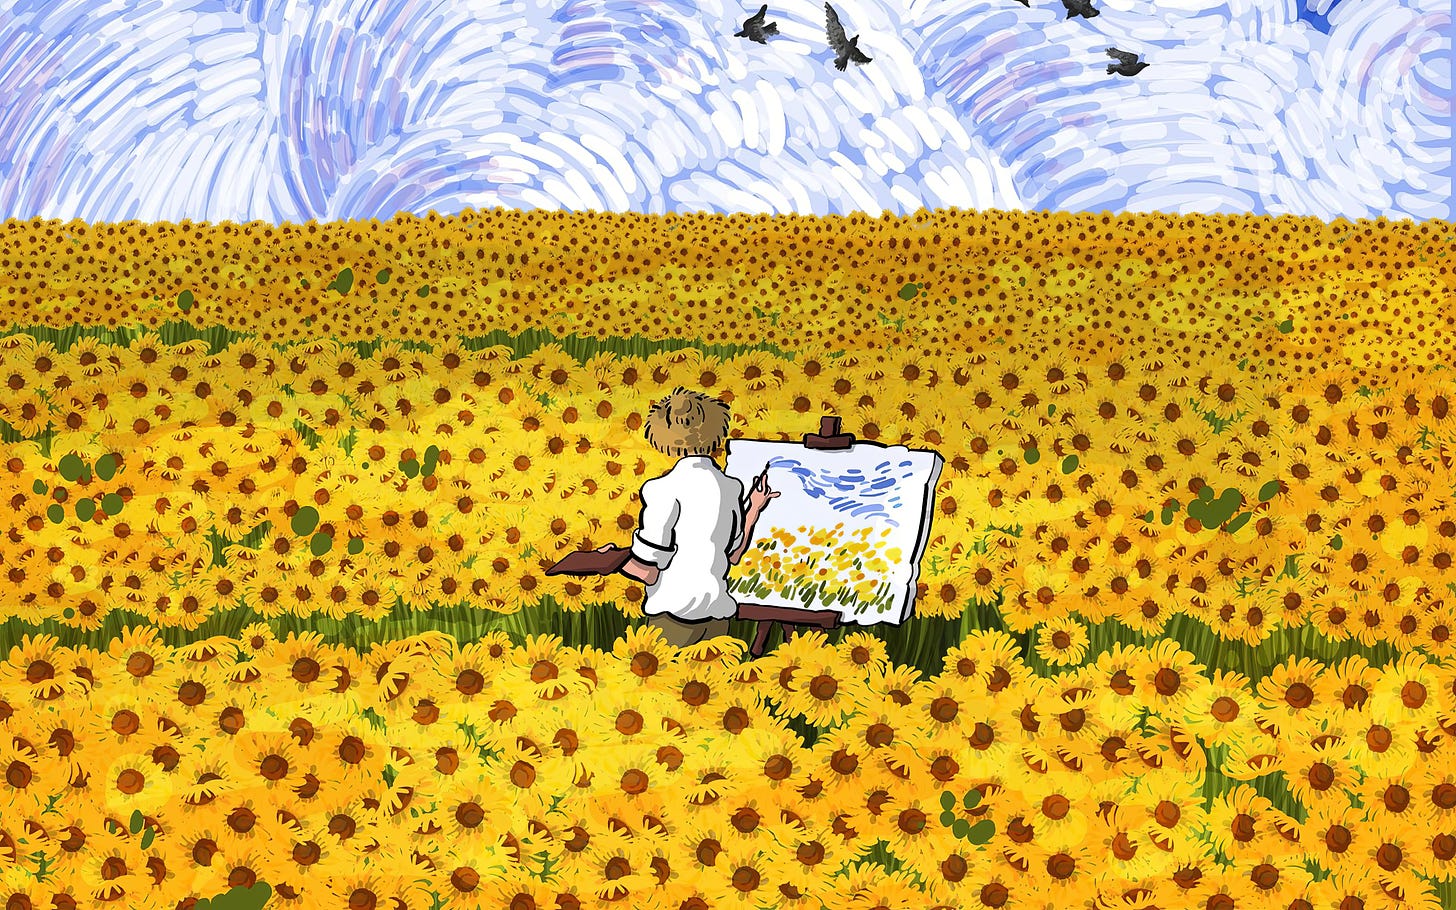 General 4378x2736 Alireza Karimi Moghaddam Vincent van Gogh painting sunflowers flowers birds straw hat rear view field